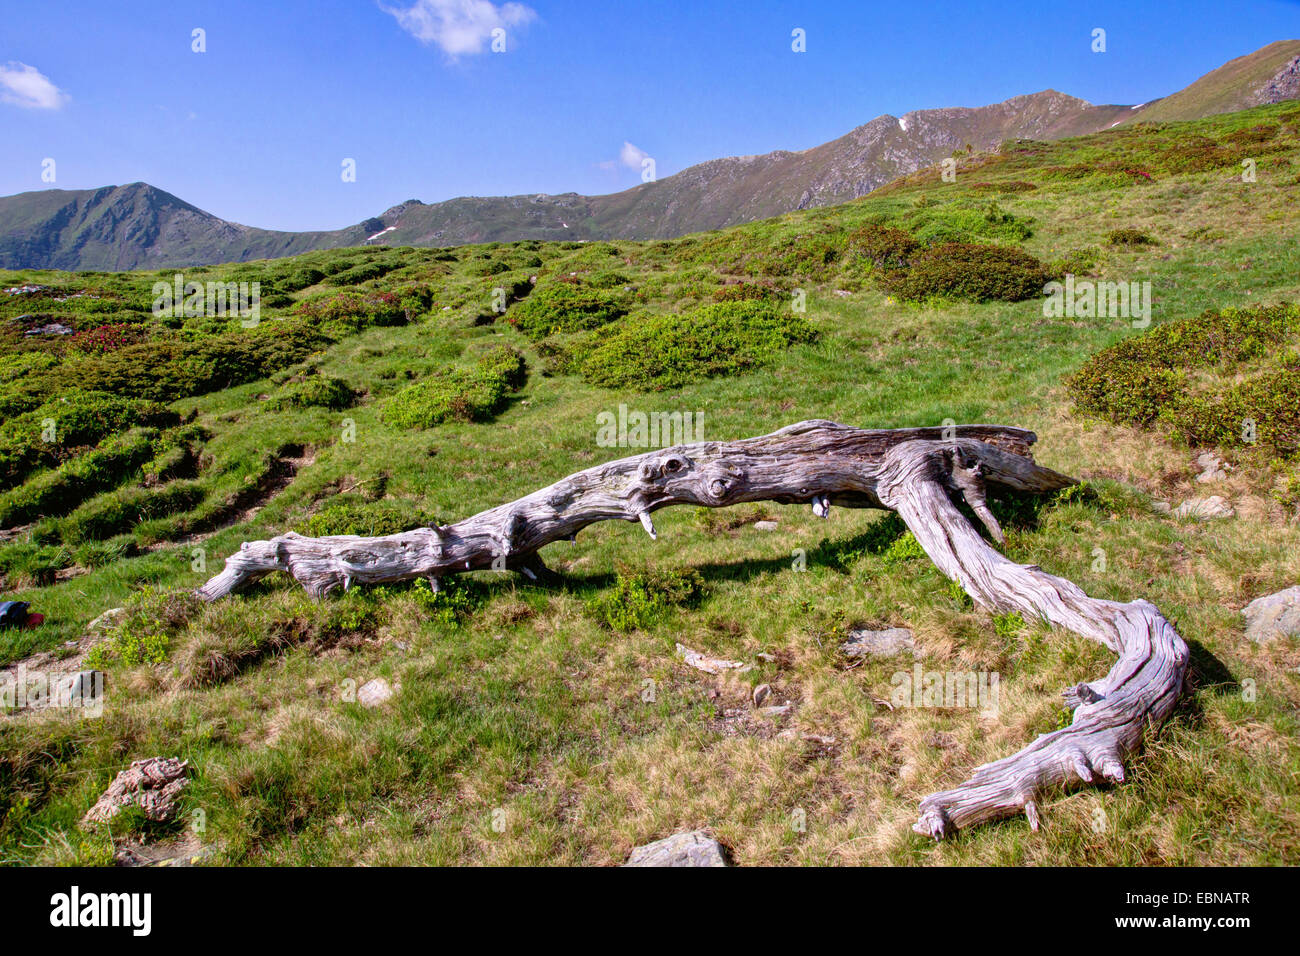 Swiss stone pine, arolla pine (Pinus cembra), overturned old log in mountain meadow, Austria, Kaernten, Nockberge National Park Stock Photo